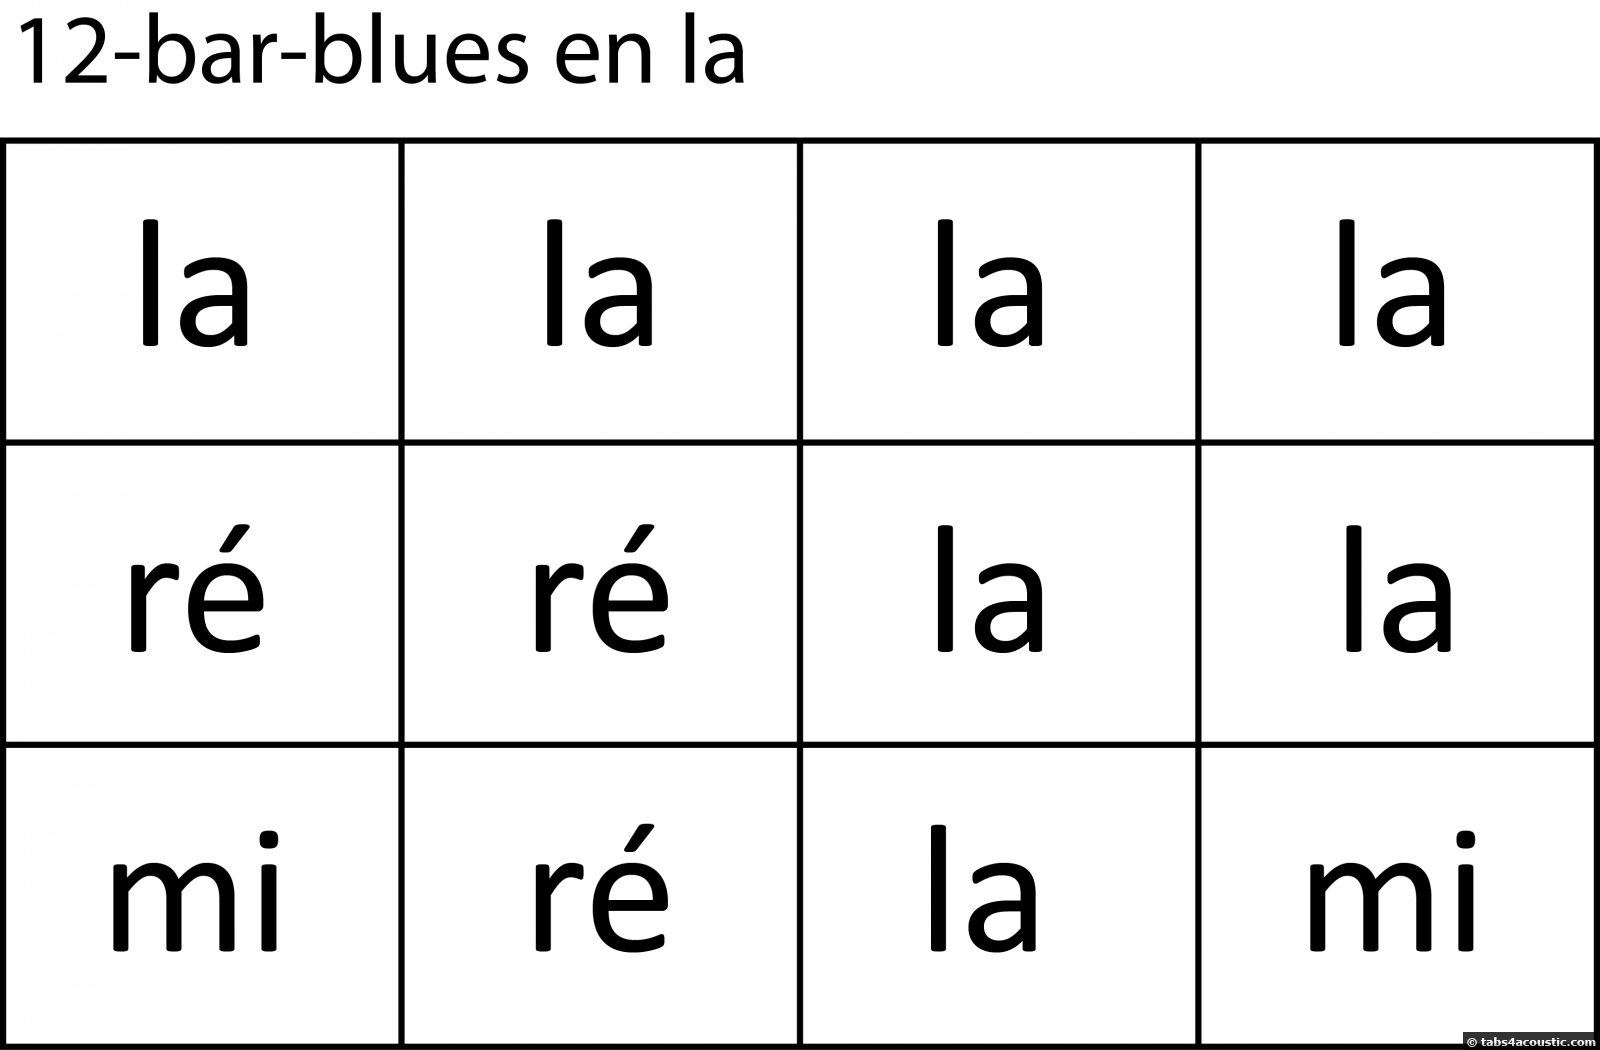 12-bar-blues in A